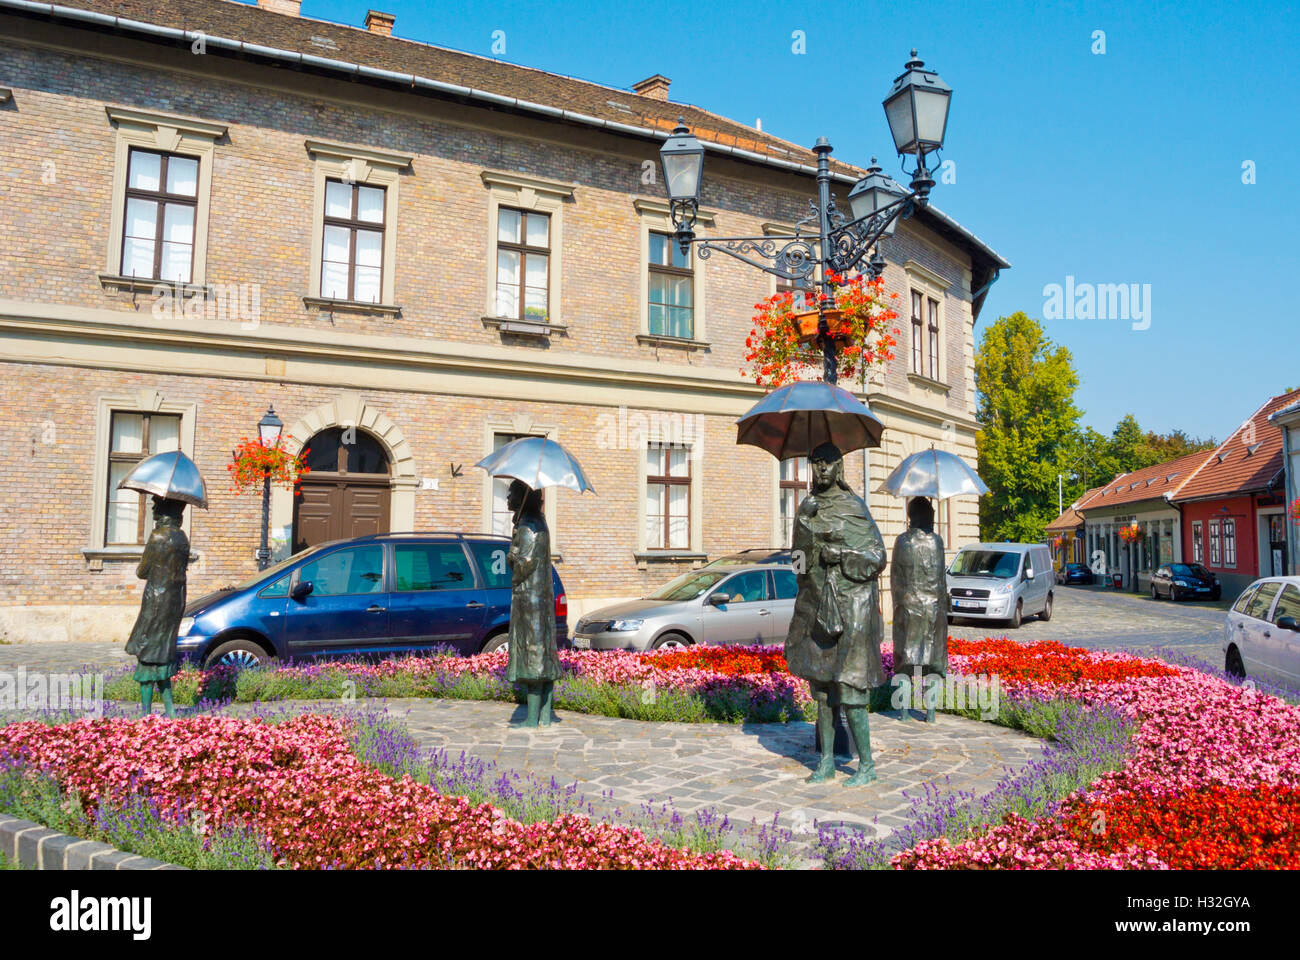 Fő tér, main square, with Várakozók sculpture by Imre Varga, Obuda, Budapest, Hungary, Europe Stock Photo